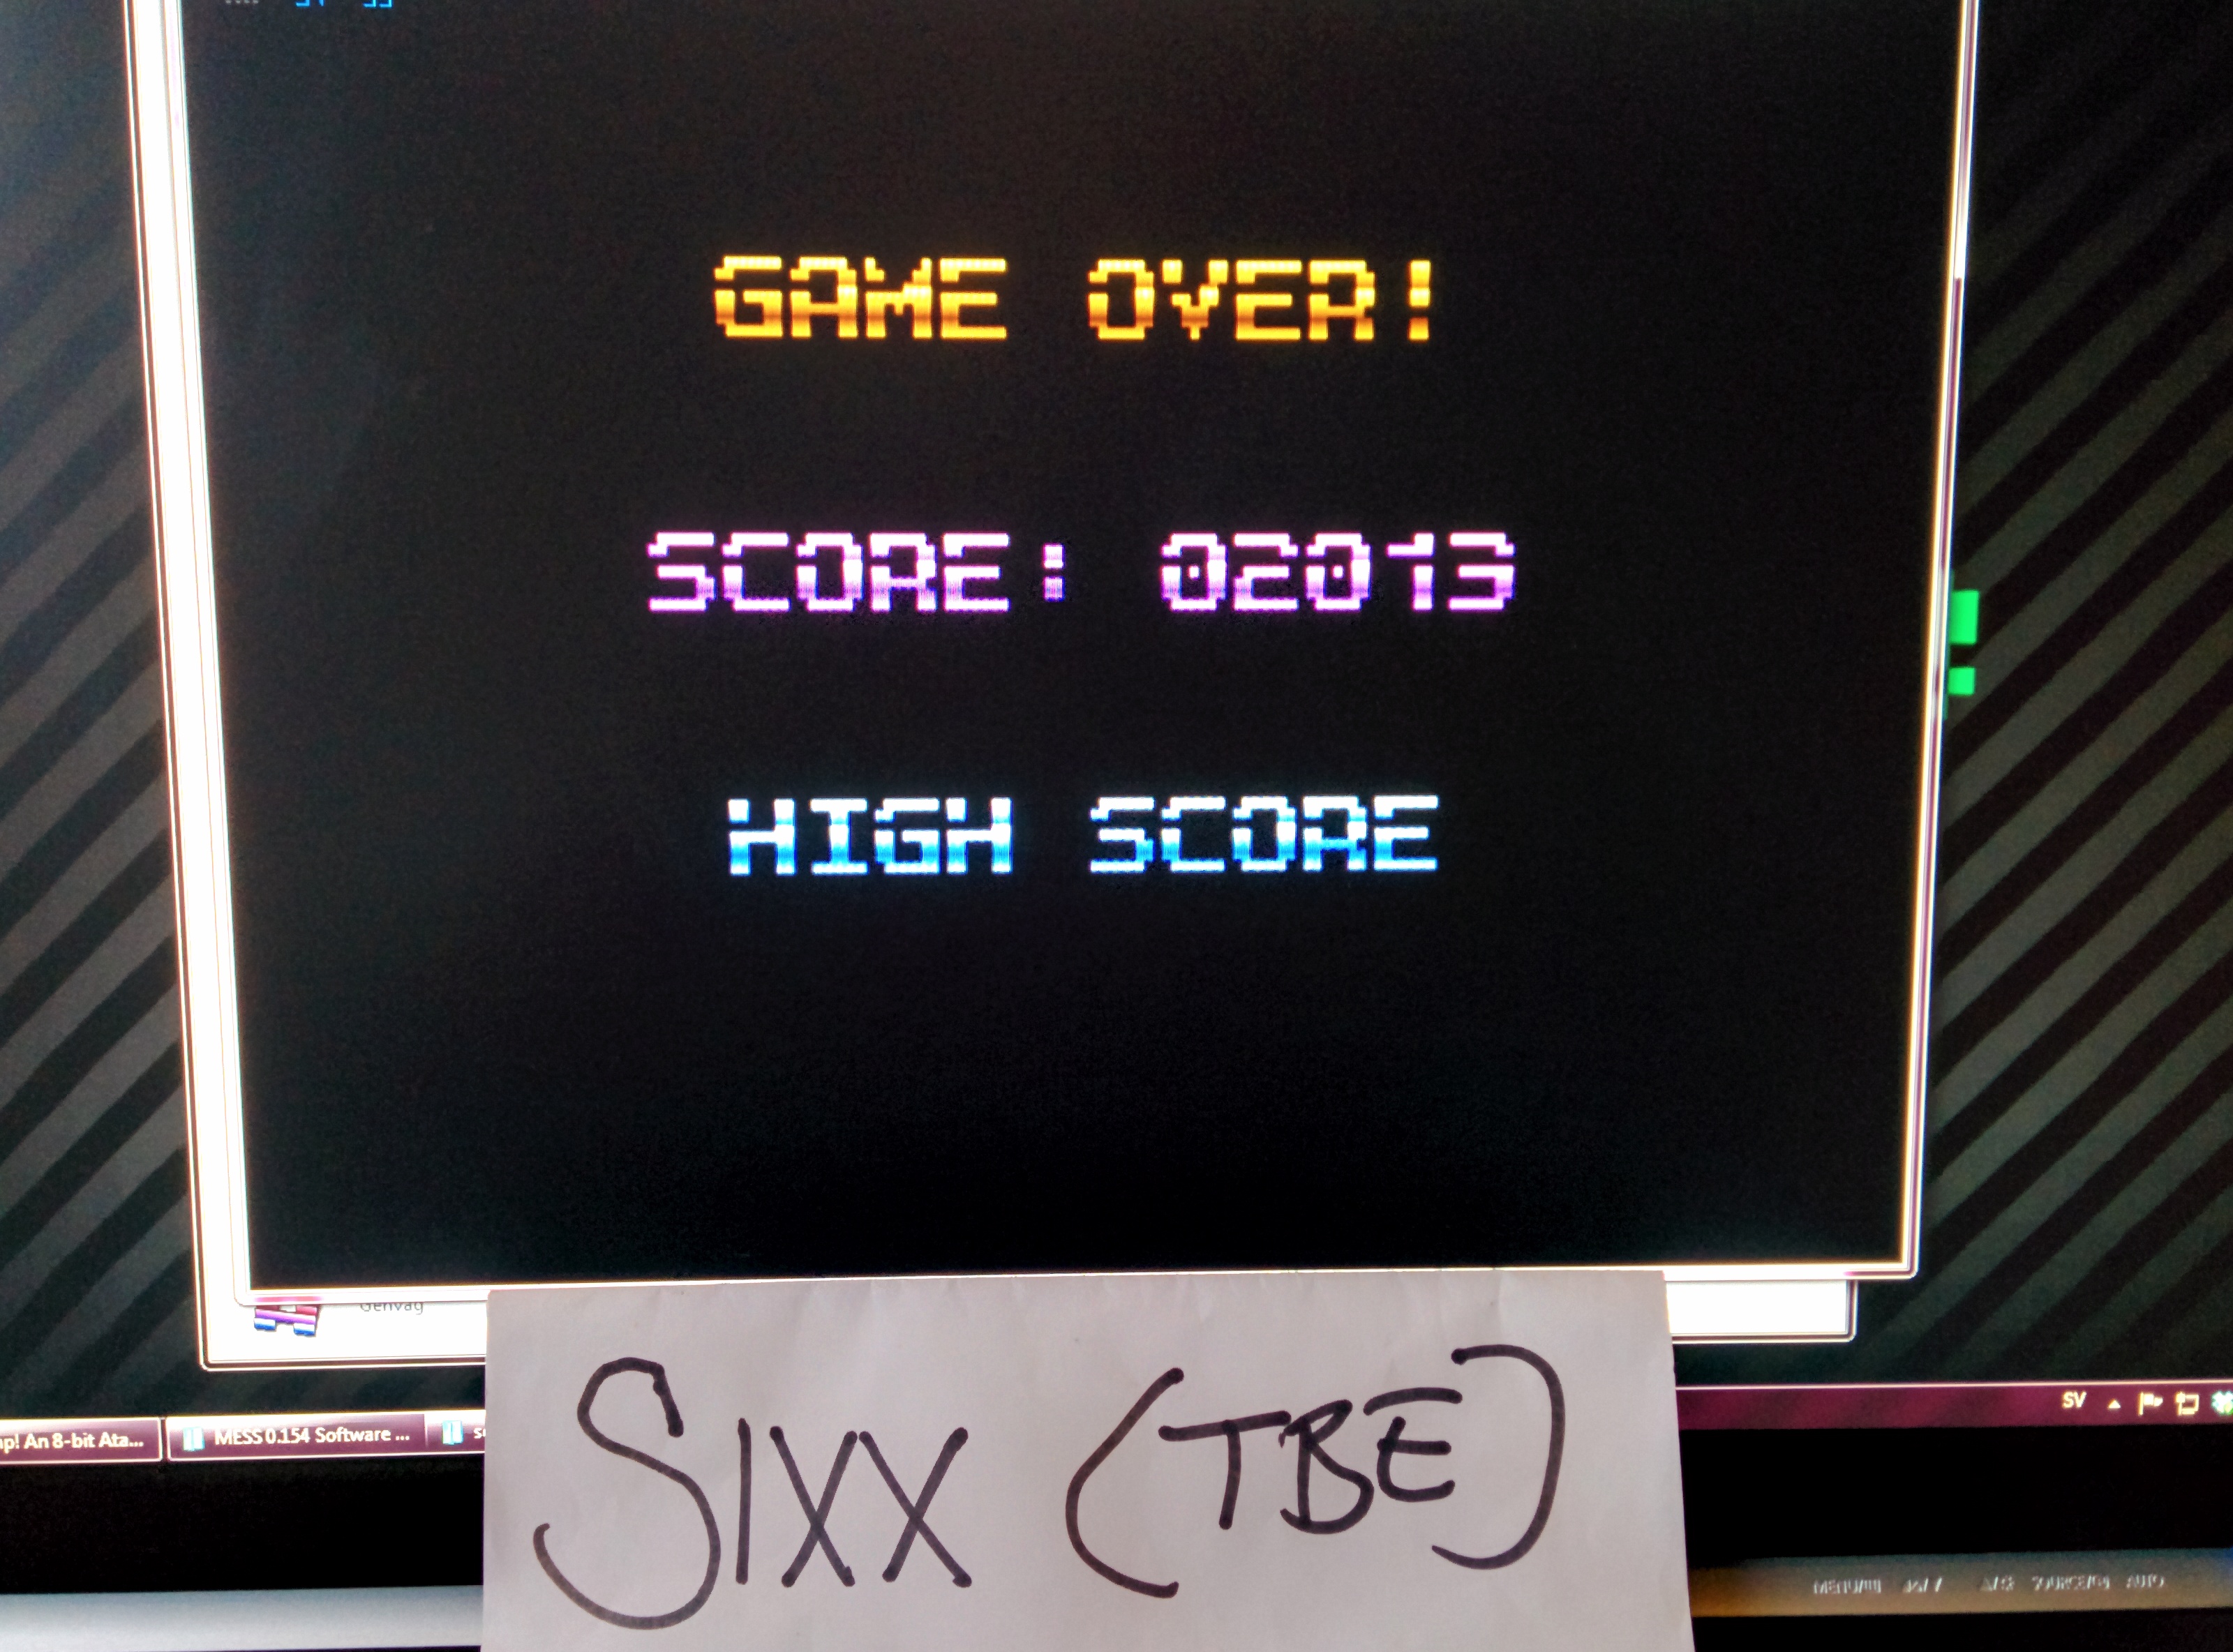 Sixx: Yoomp!: Level 1 Start (Atari 400/800/XL/XE Emulated) 2,013 points on 2014-08-10 13:00:50